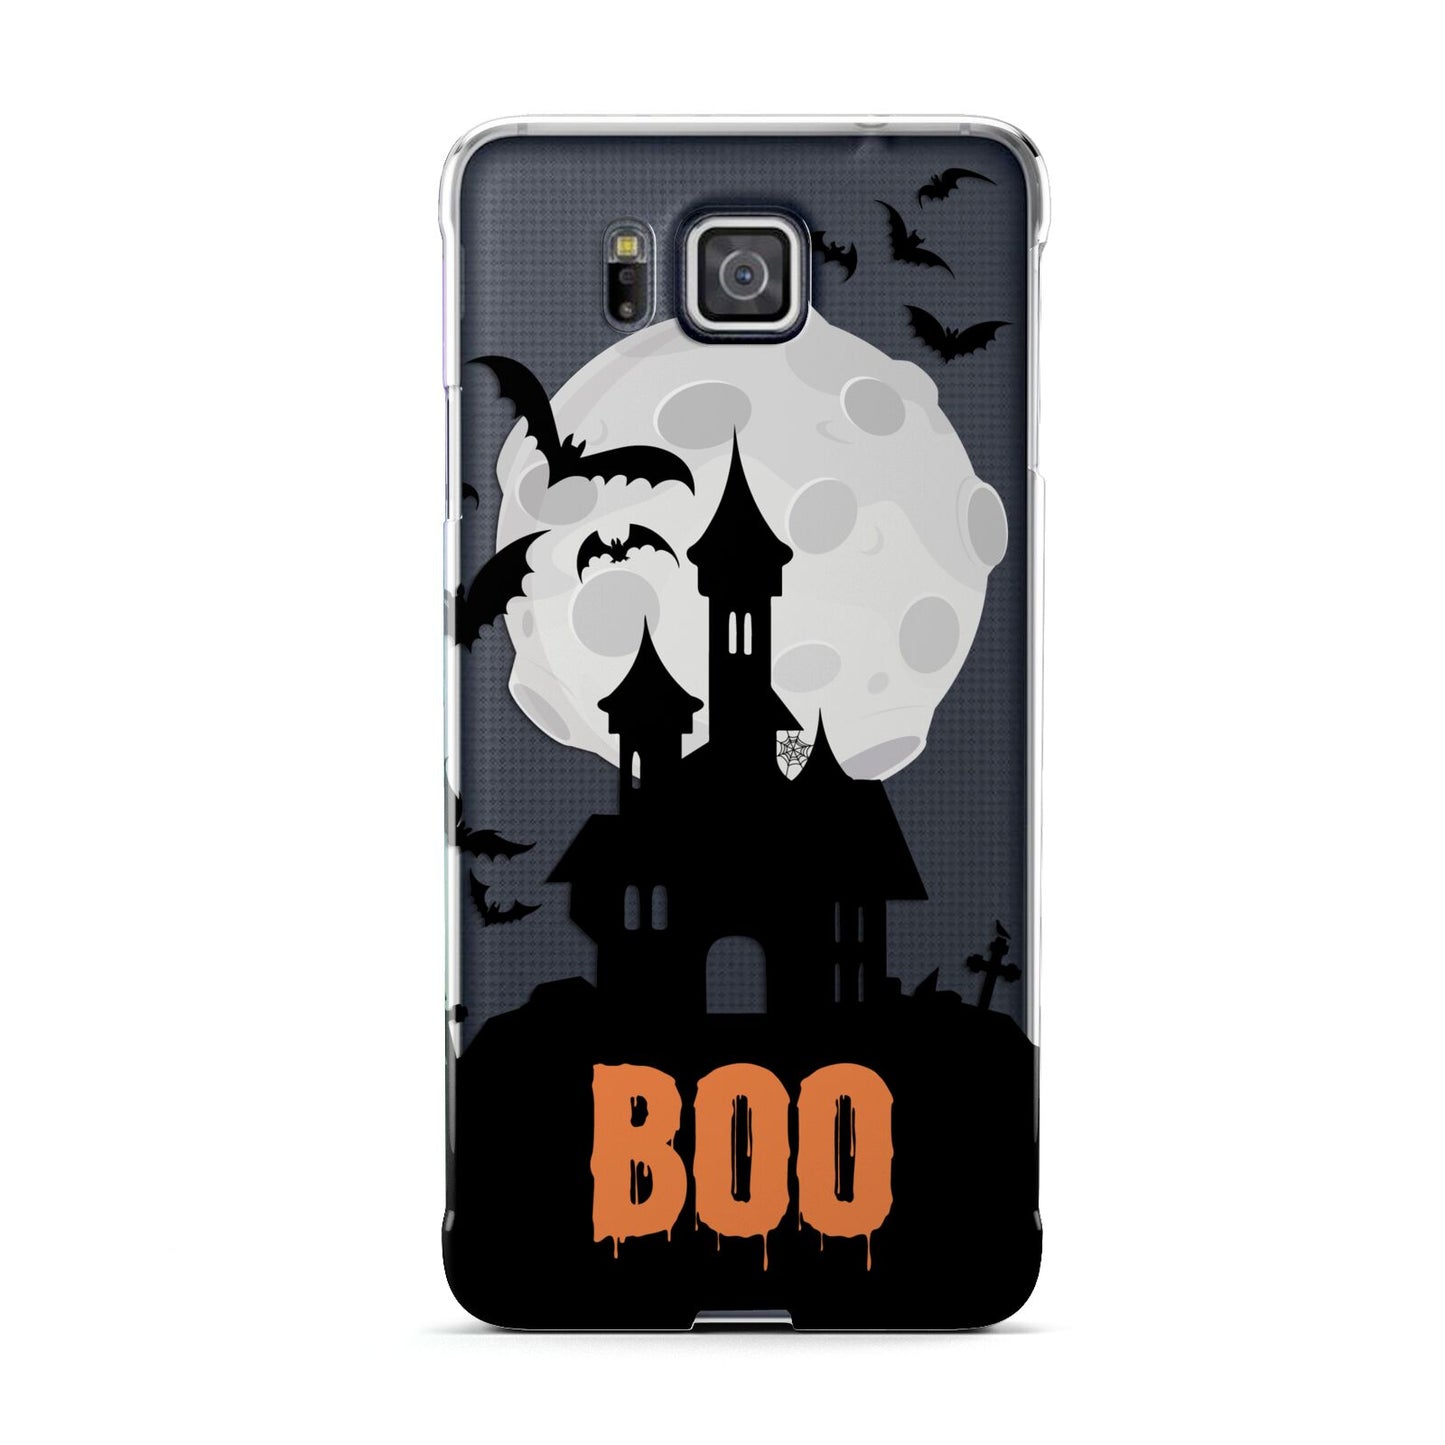 Boo Gothic Black Halloween Samsung Galaxy Alpha Case